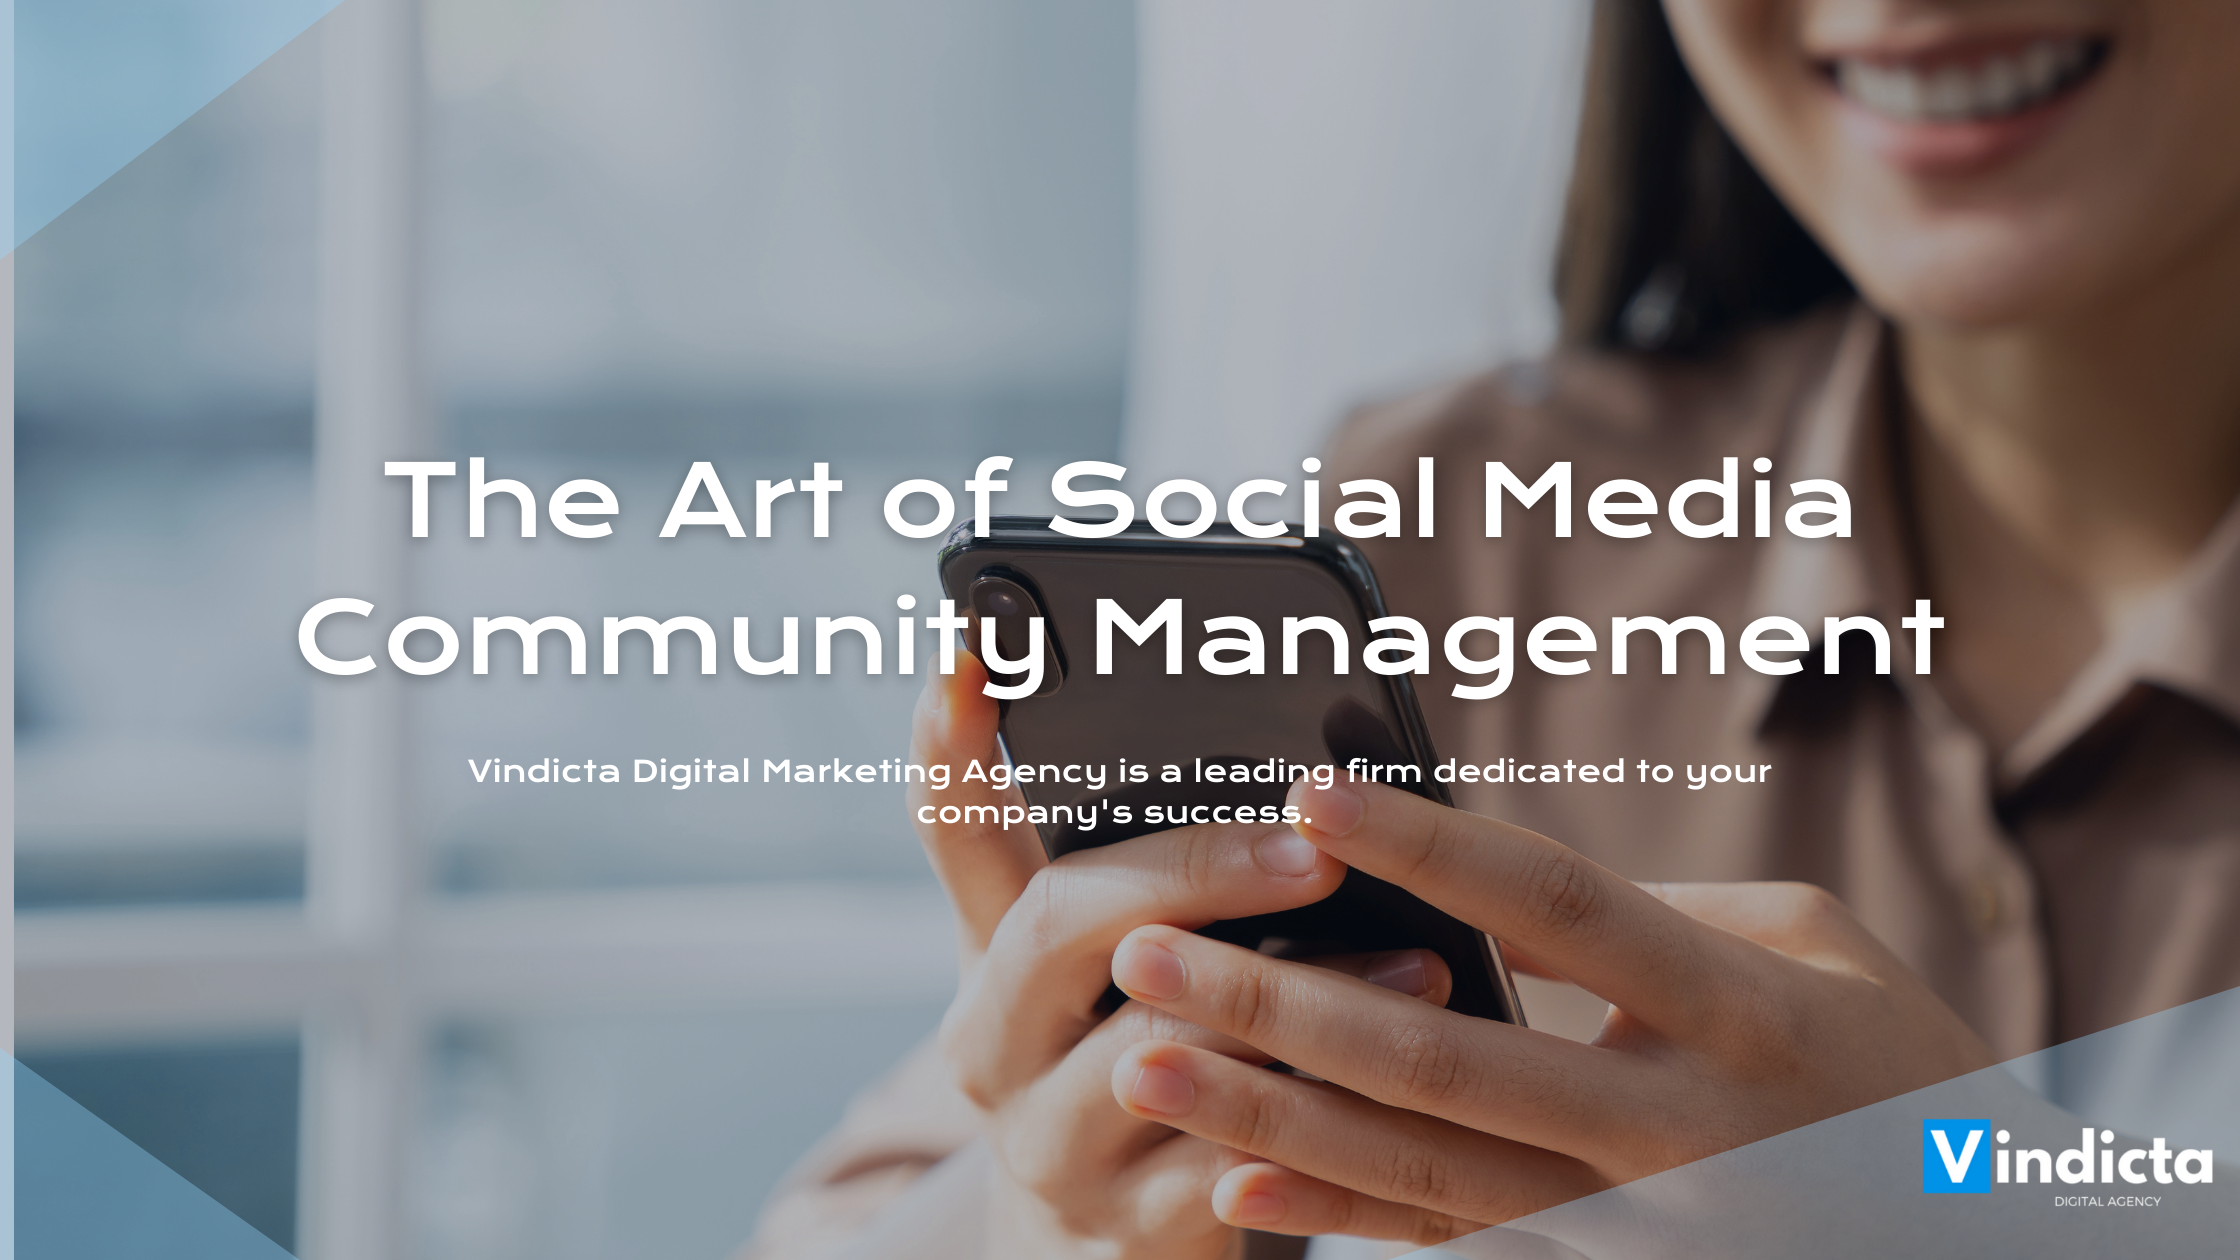 The Art of Social Media Community Management